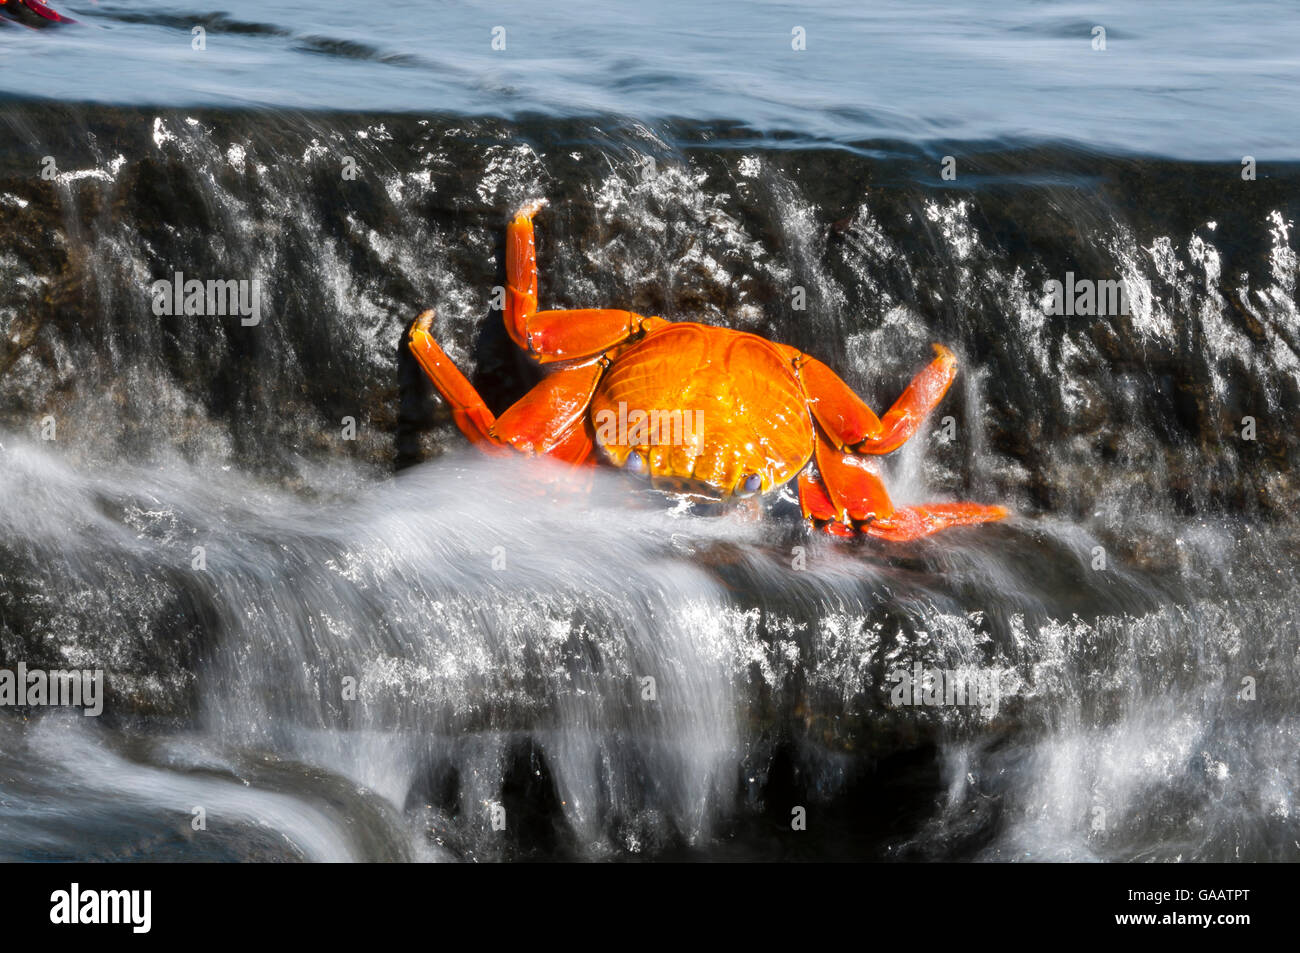 Morto a Sally lightfoot crab (Grapsus grapsus) lavato fino in surf, Puerto Egas, James Bay, isola di Santiago, Galapagos, Ecuador, maggio. Foto Stock